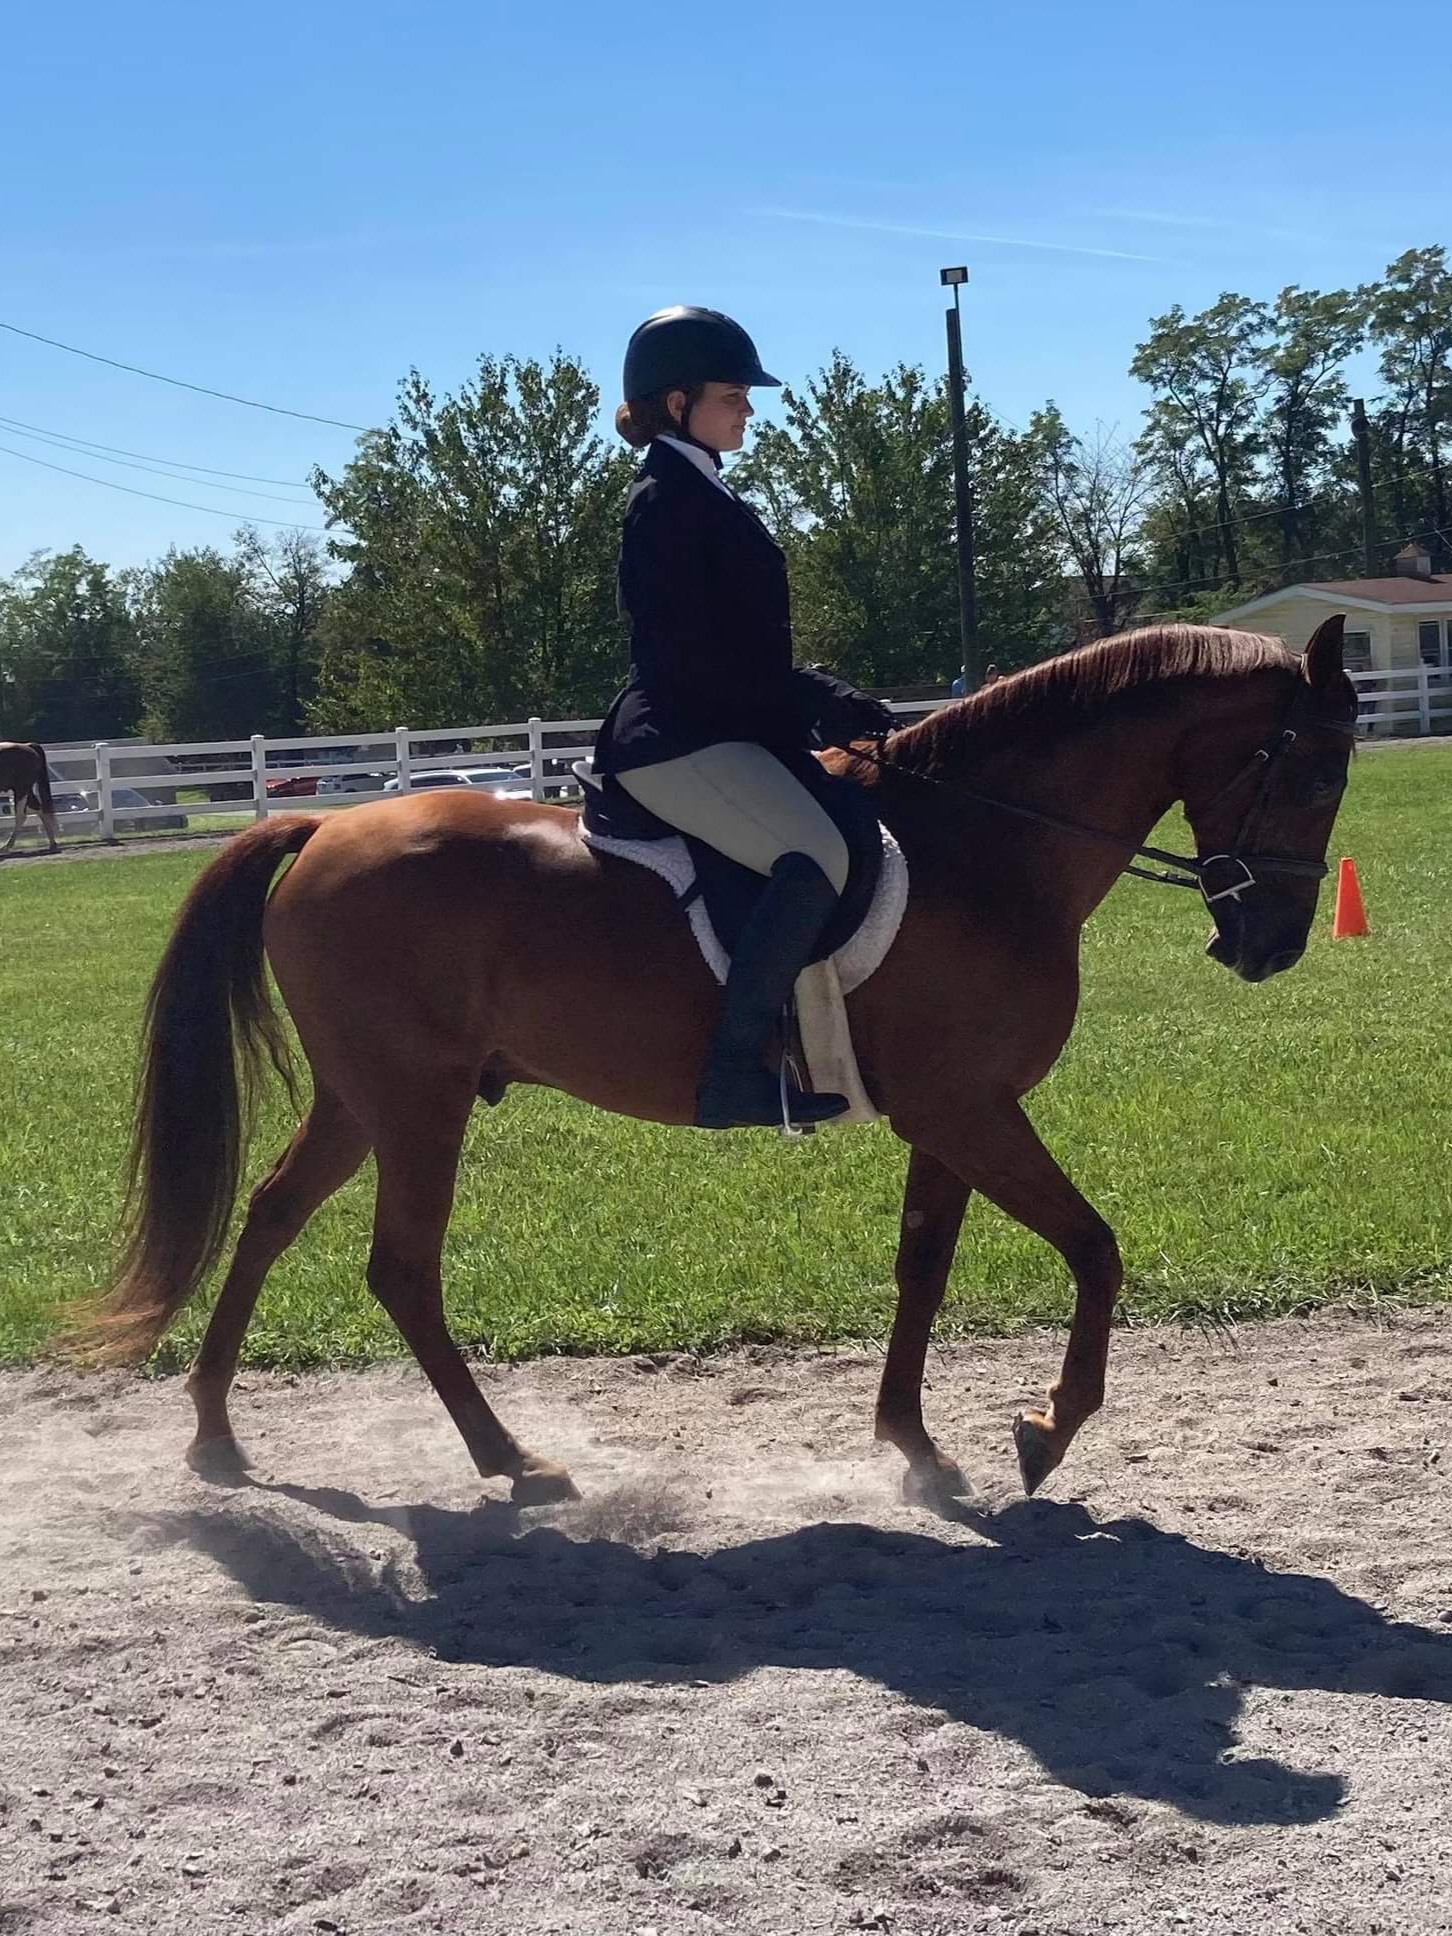 Bella riding her horse around a course